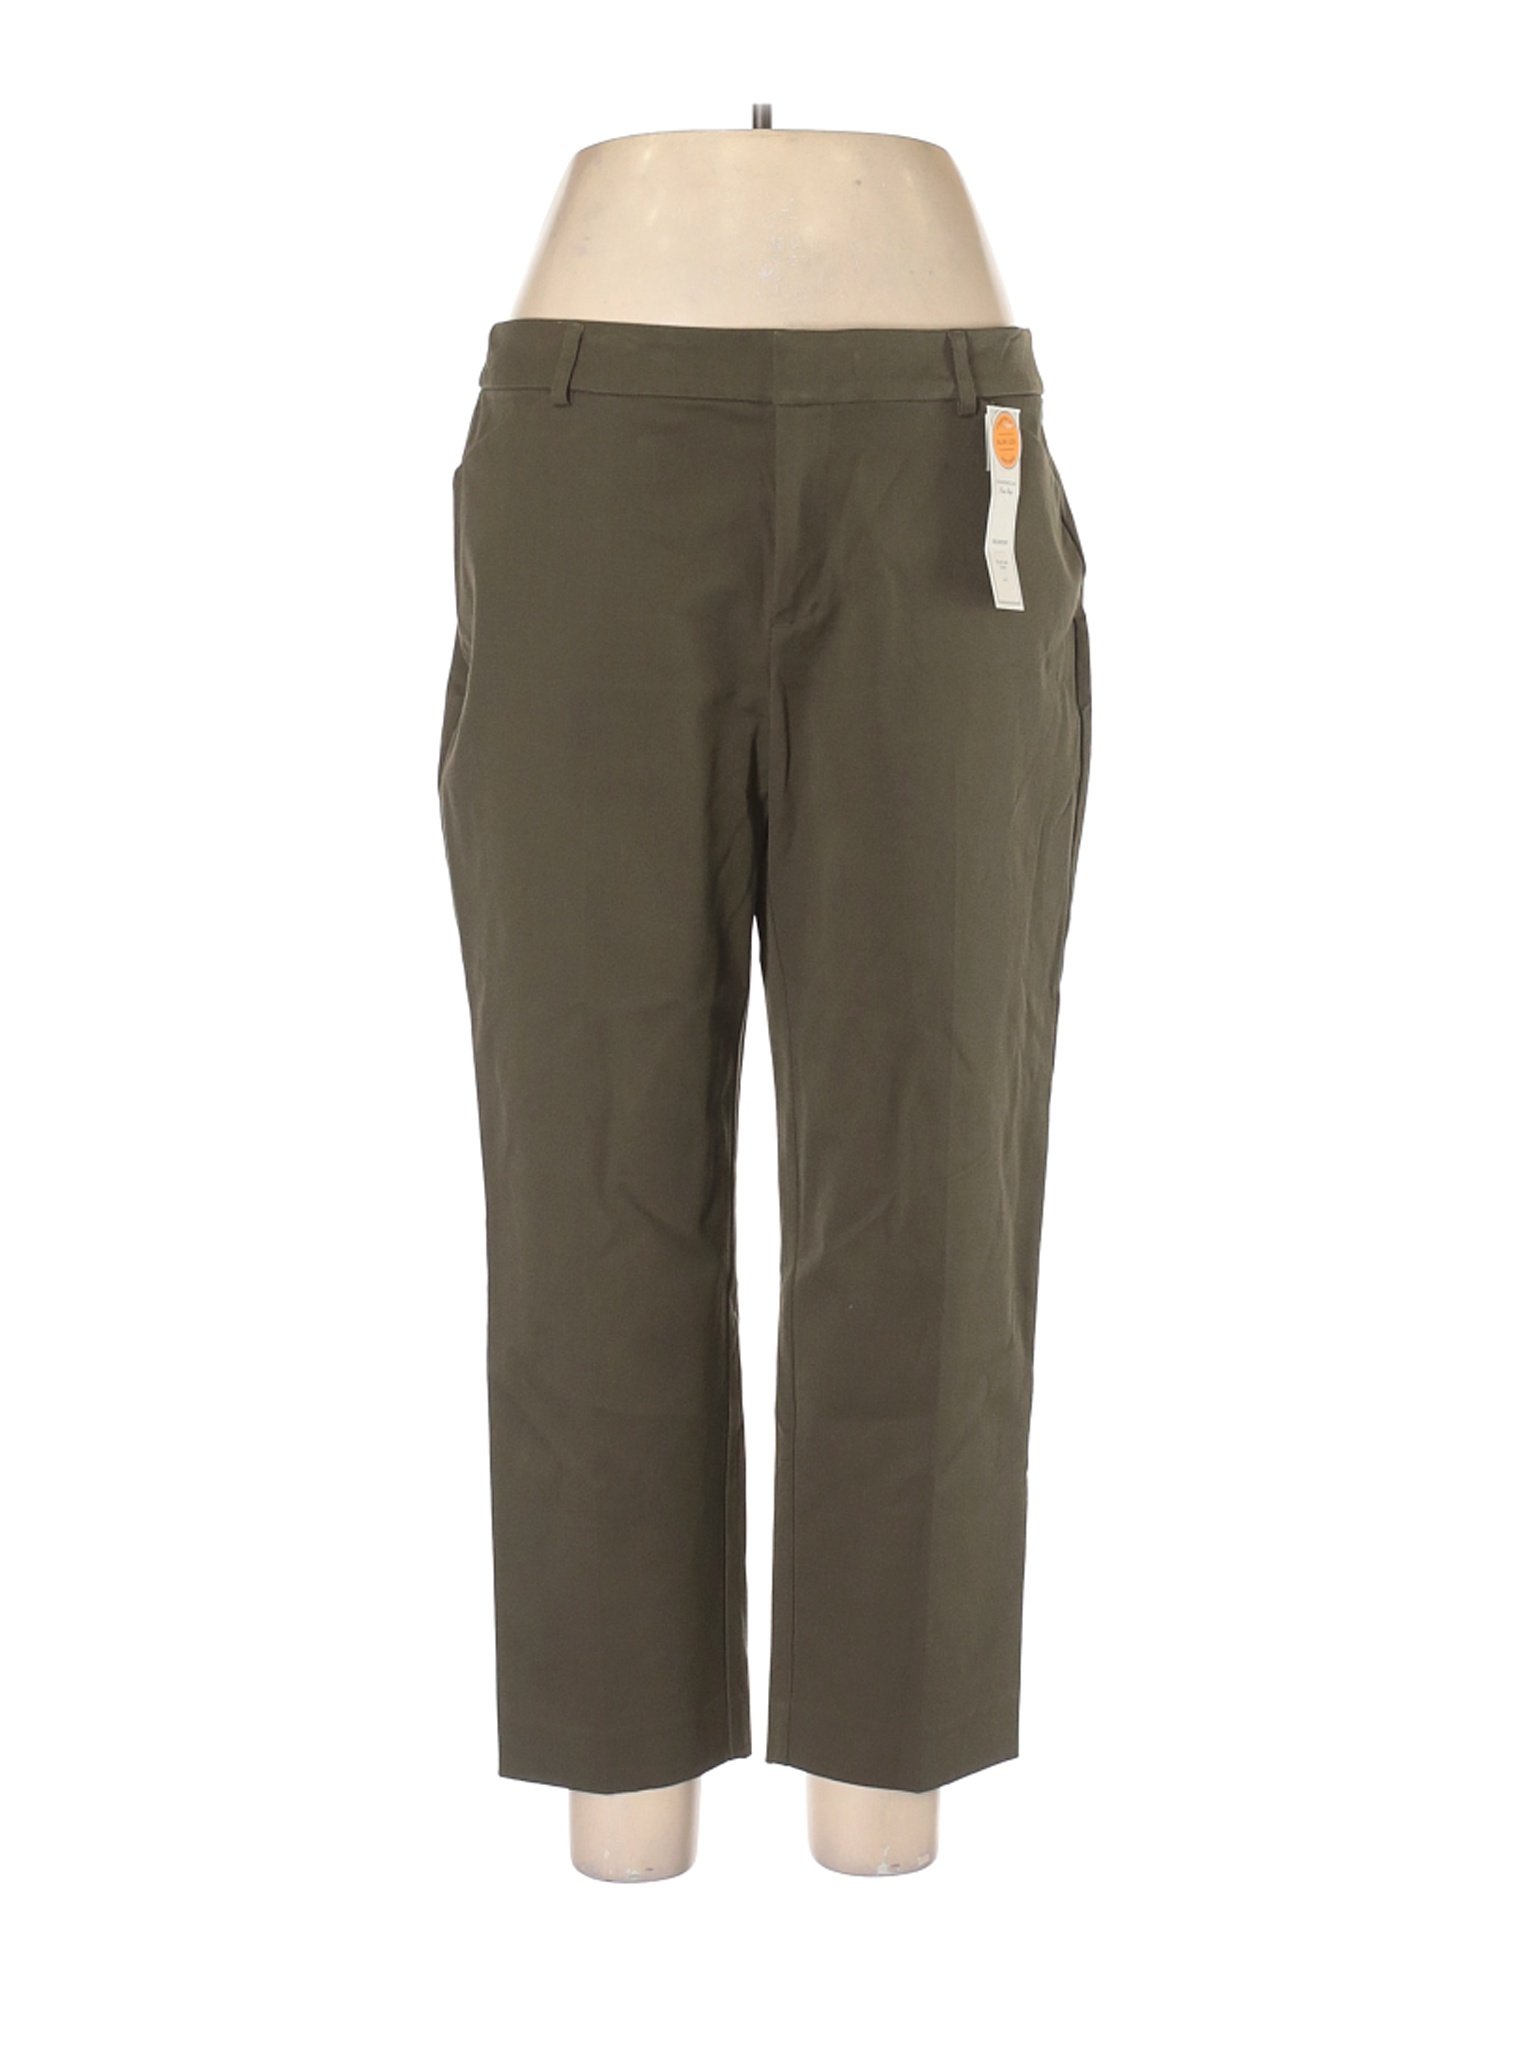 NWT Charter Club Women Green Dress Pants 14 | eBay